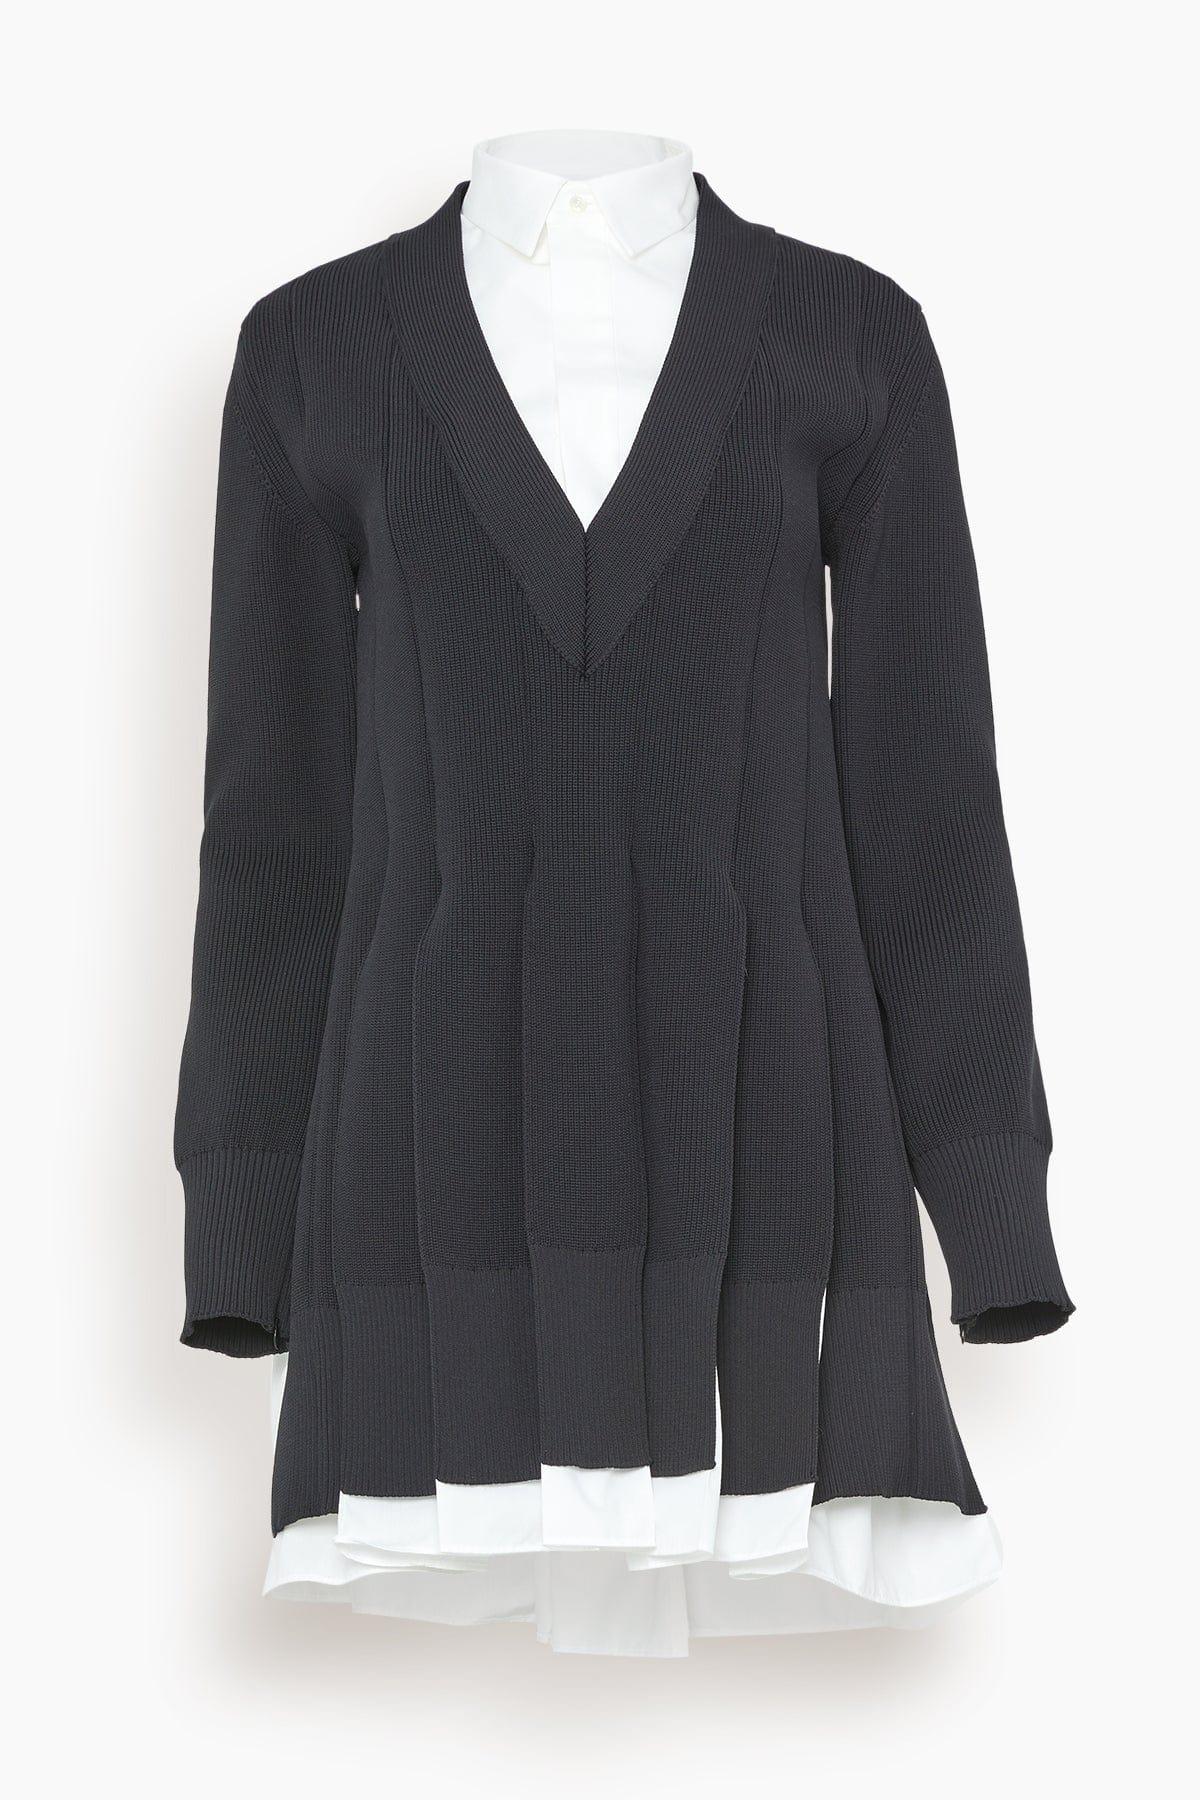 Sacai Knit Cotton Poplin Dress in Black | Lyst